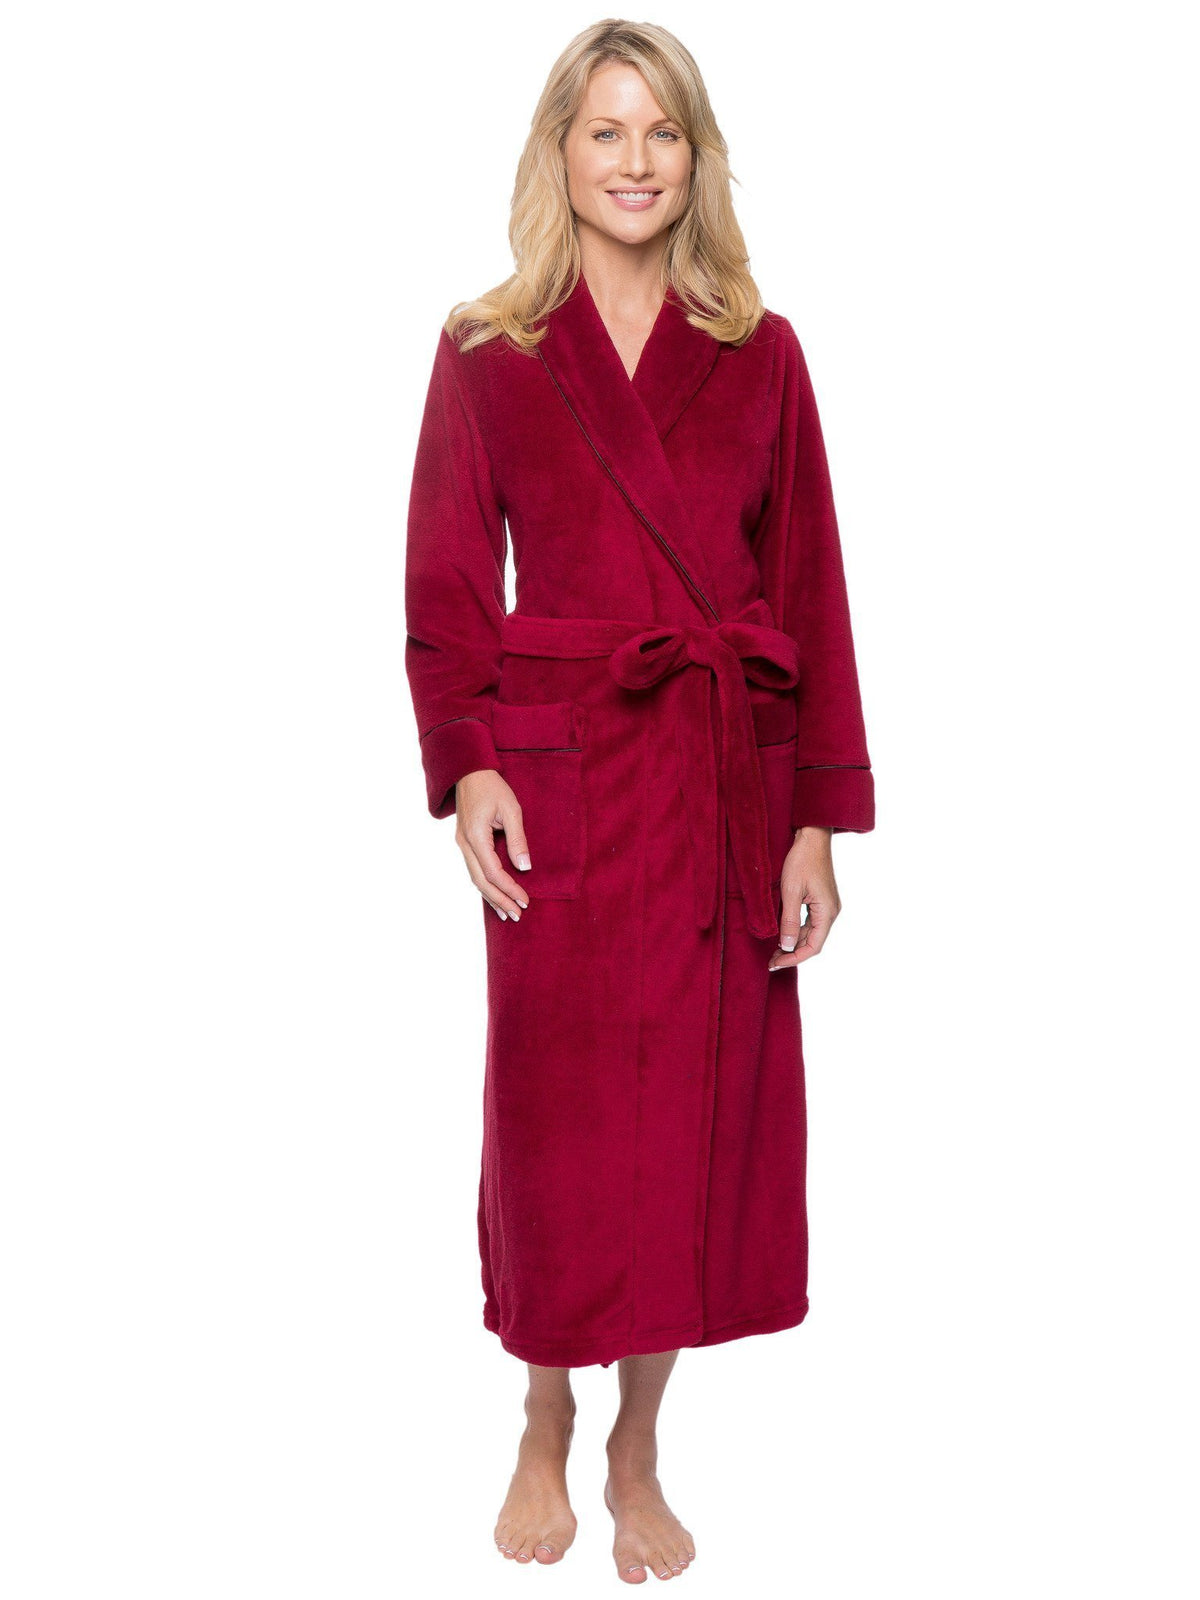 Women's Premium Coral Fleece Plush Spa/Bath Robe - Red